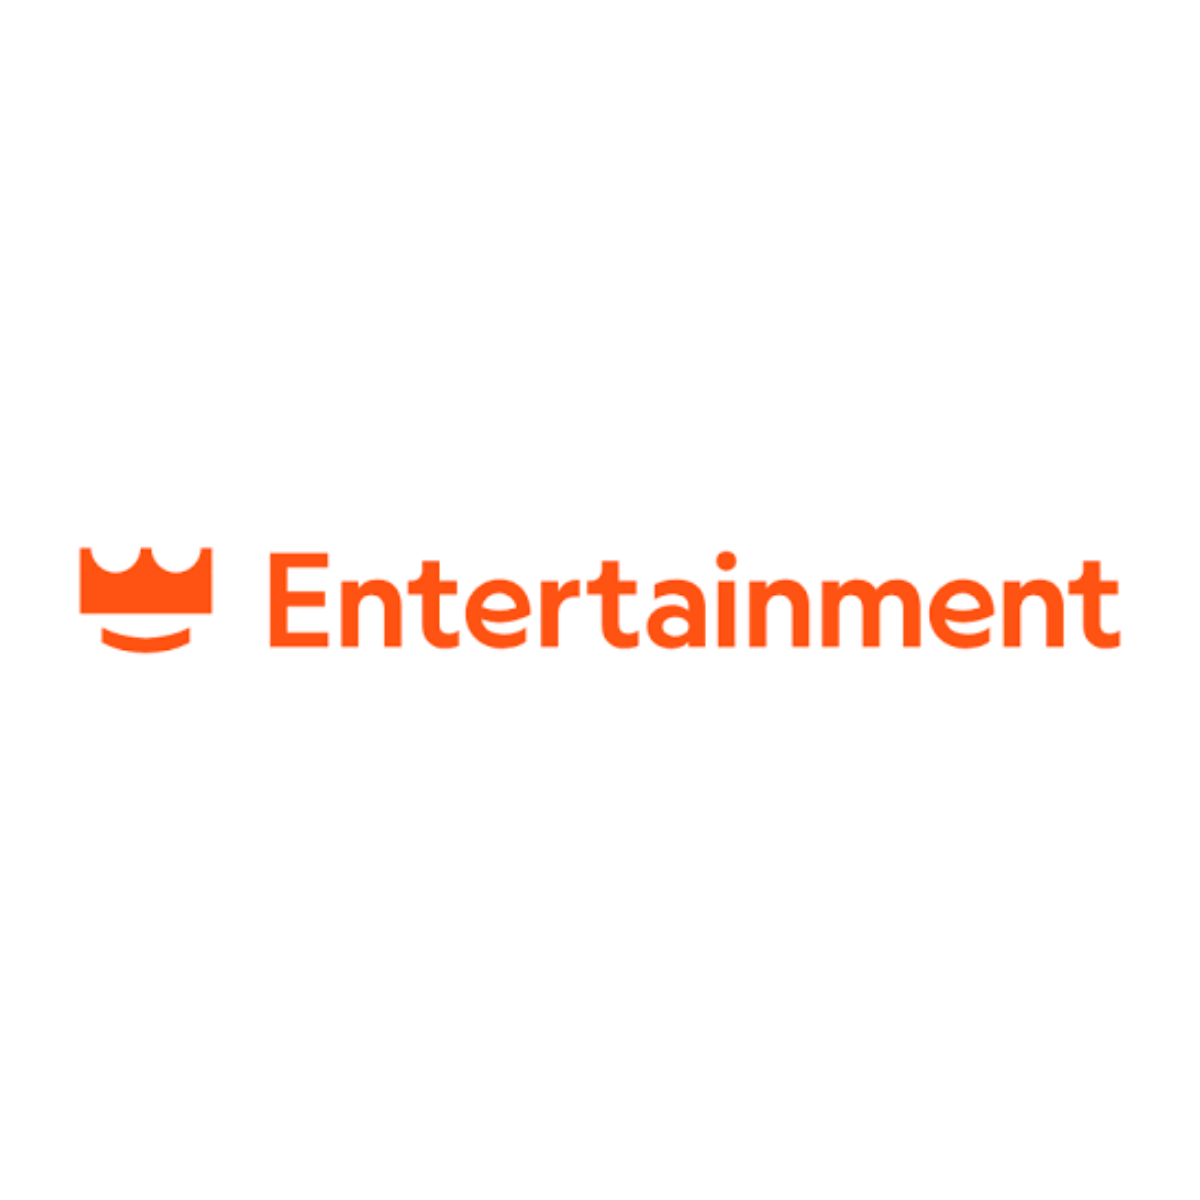 The Entertainment App